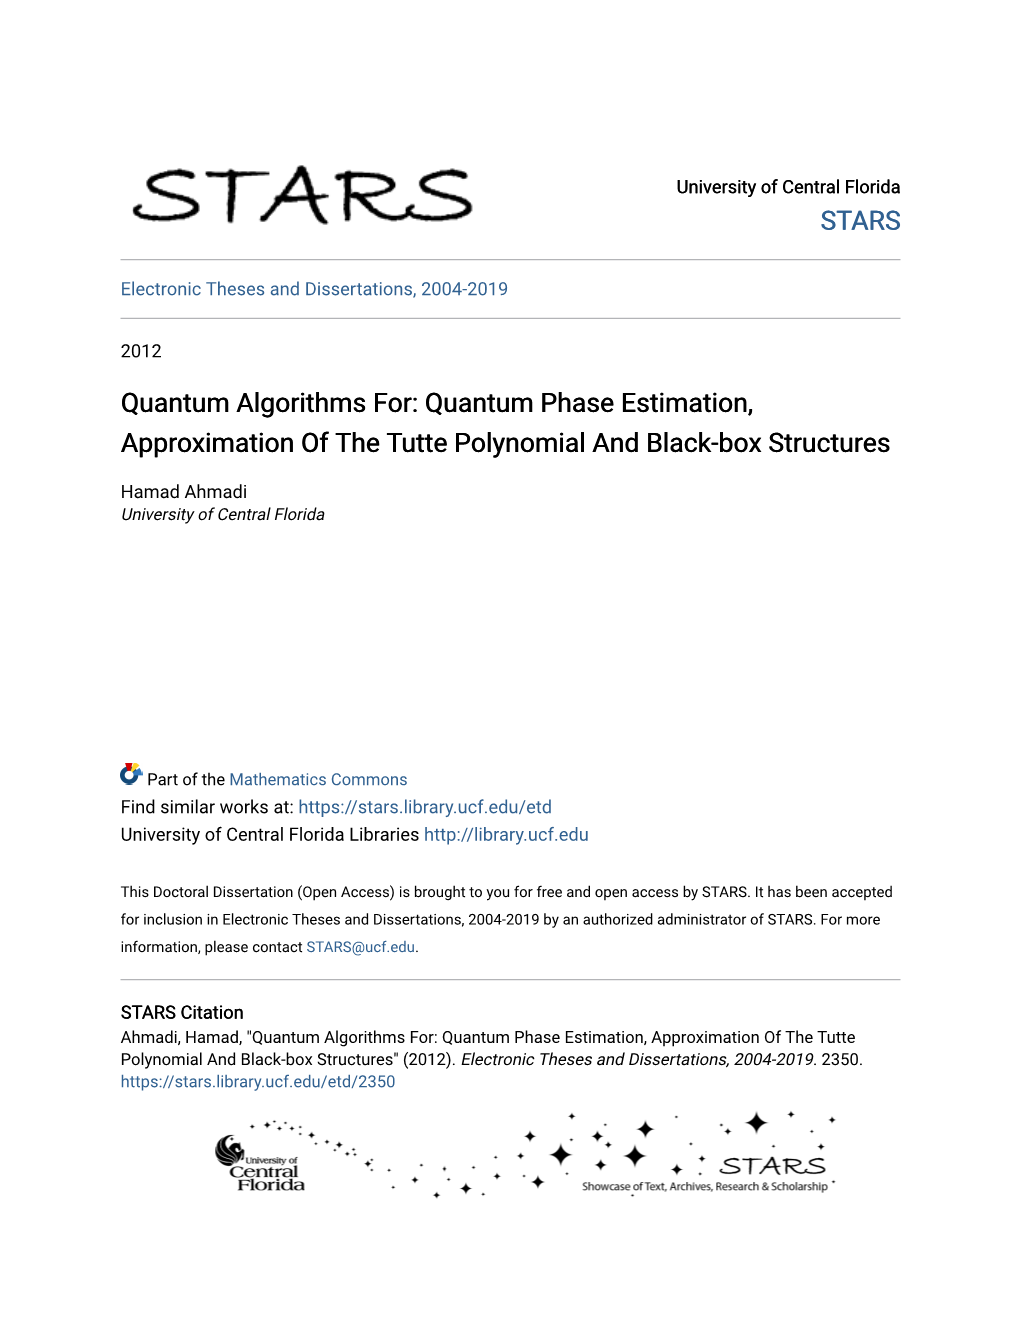 Quantum Algorithms For: Quantum Phase Estimation, Approximation of the Tutte Polynomial and Black-Box Structures